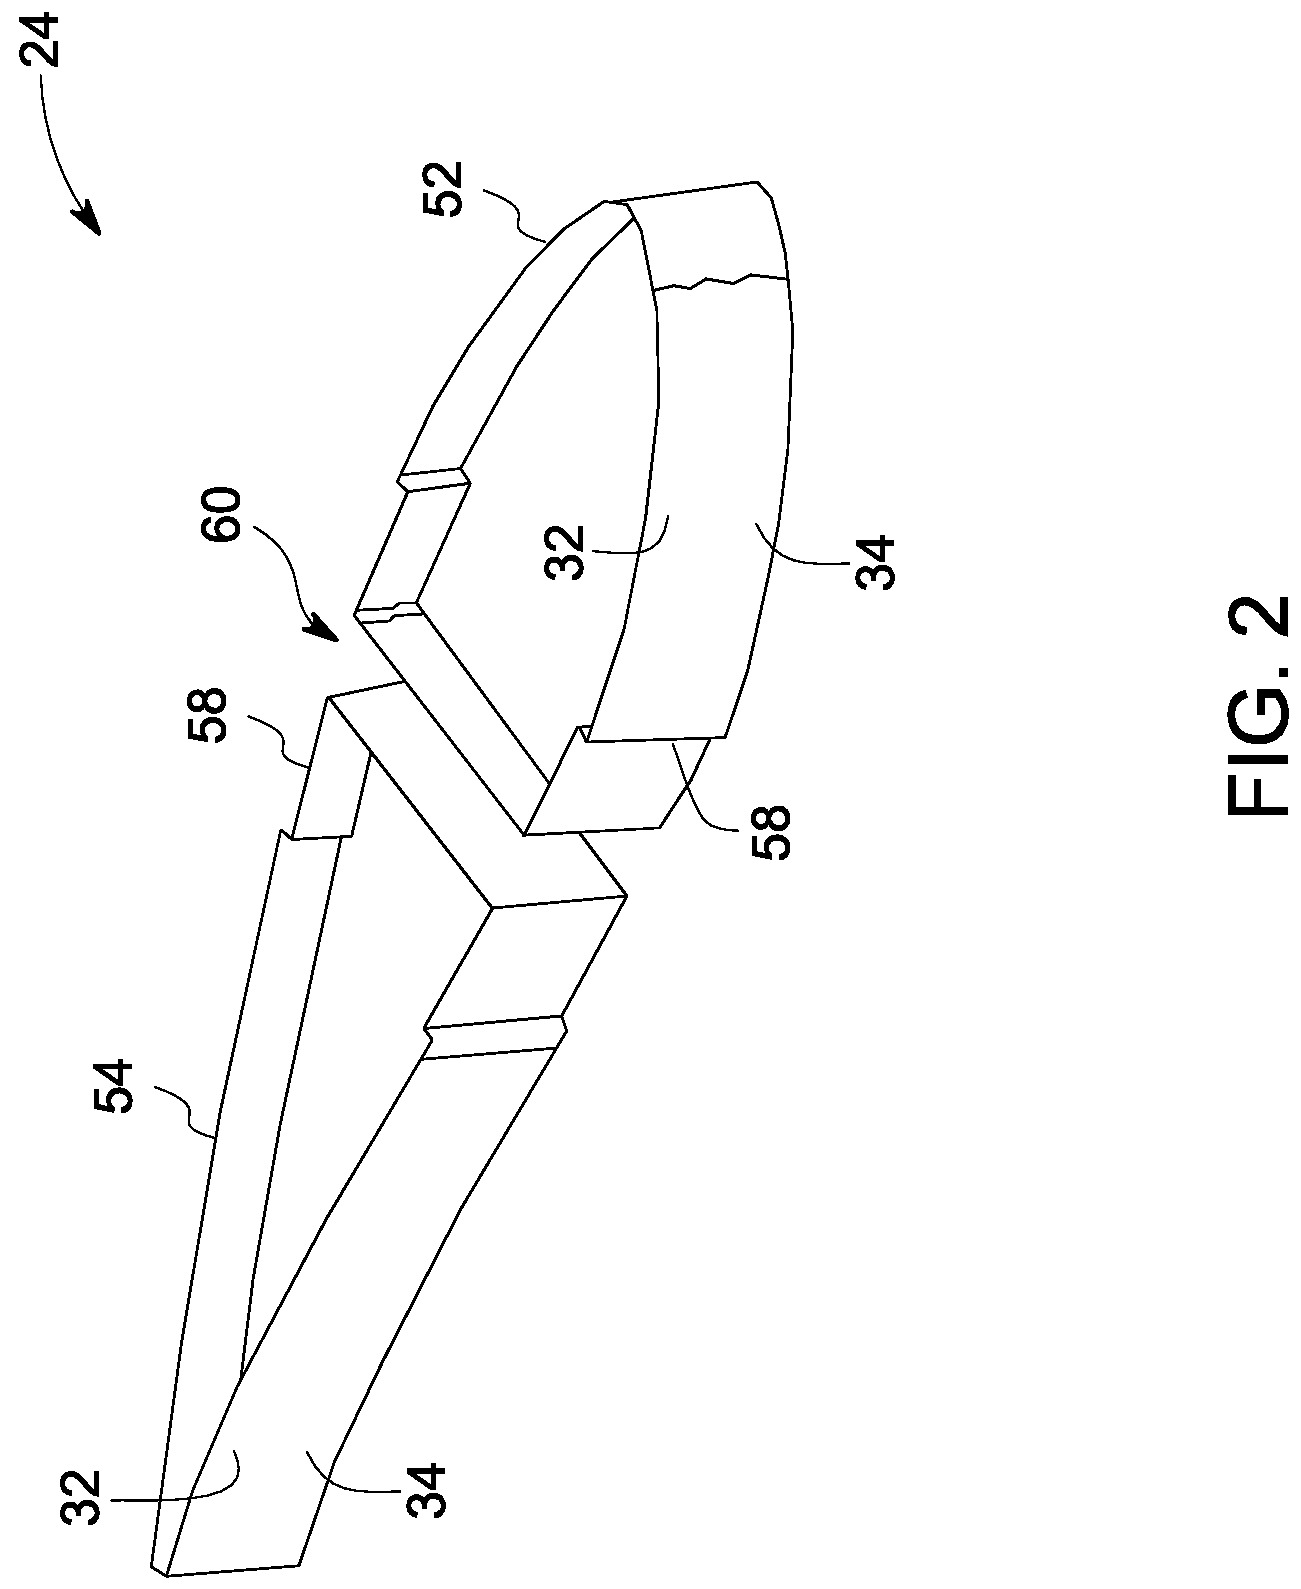 Multi-segment wind turbine blade and method for assembling the same